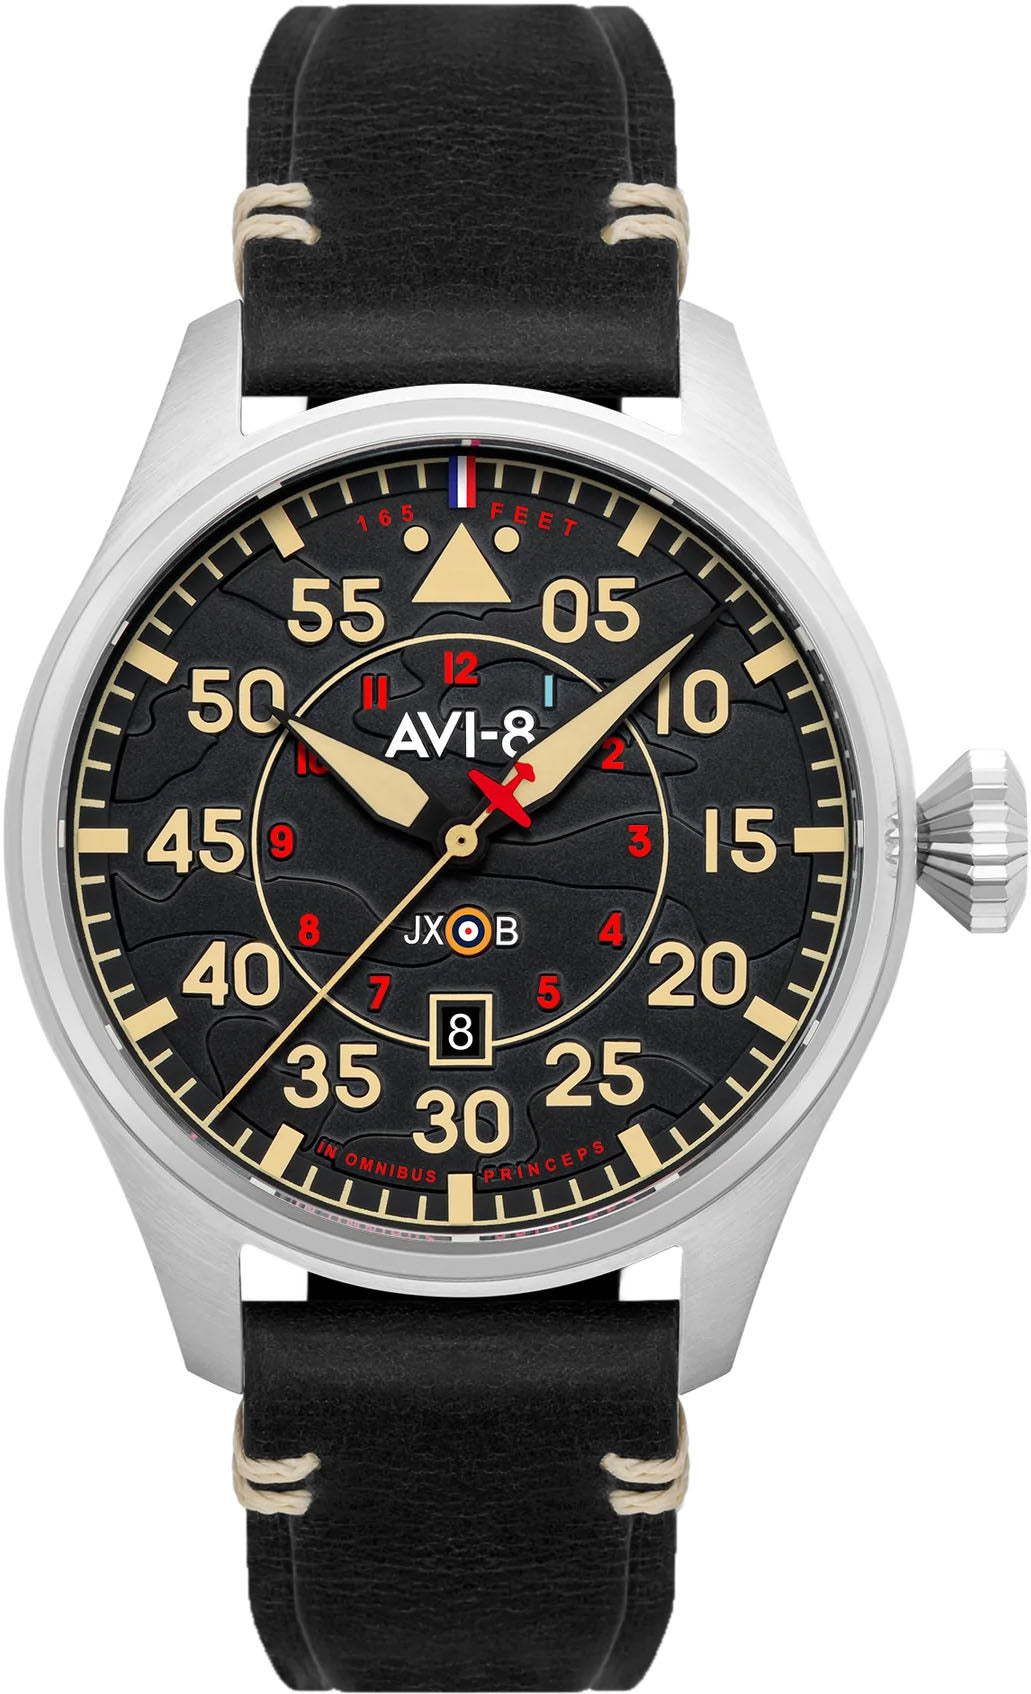 Photos - Wrist Watch AVI-8 Watch Hawker Hurricane Clowes Automatic - Black AV-159 